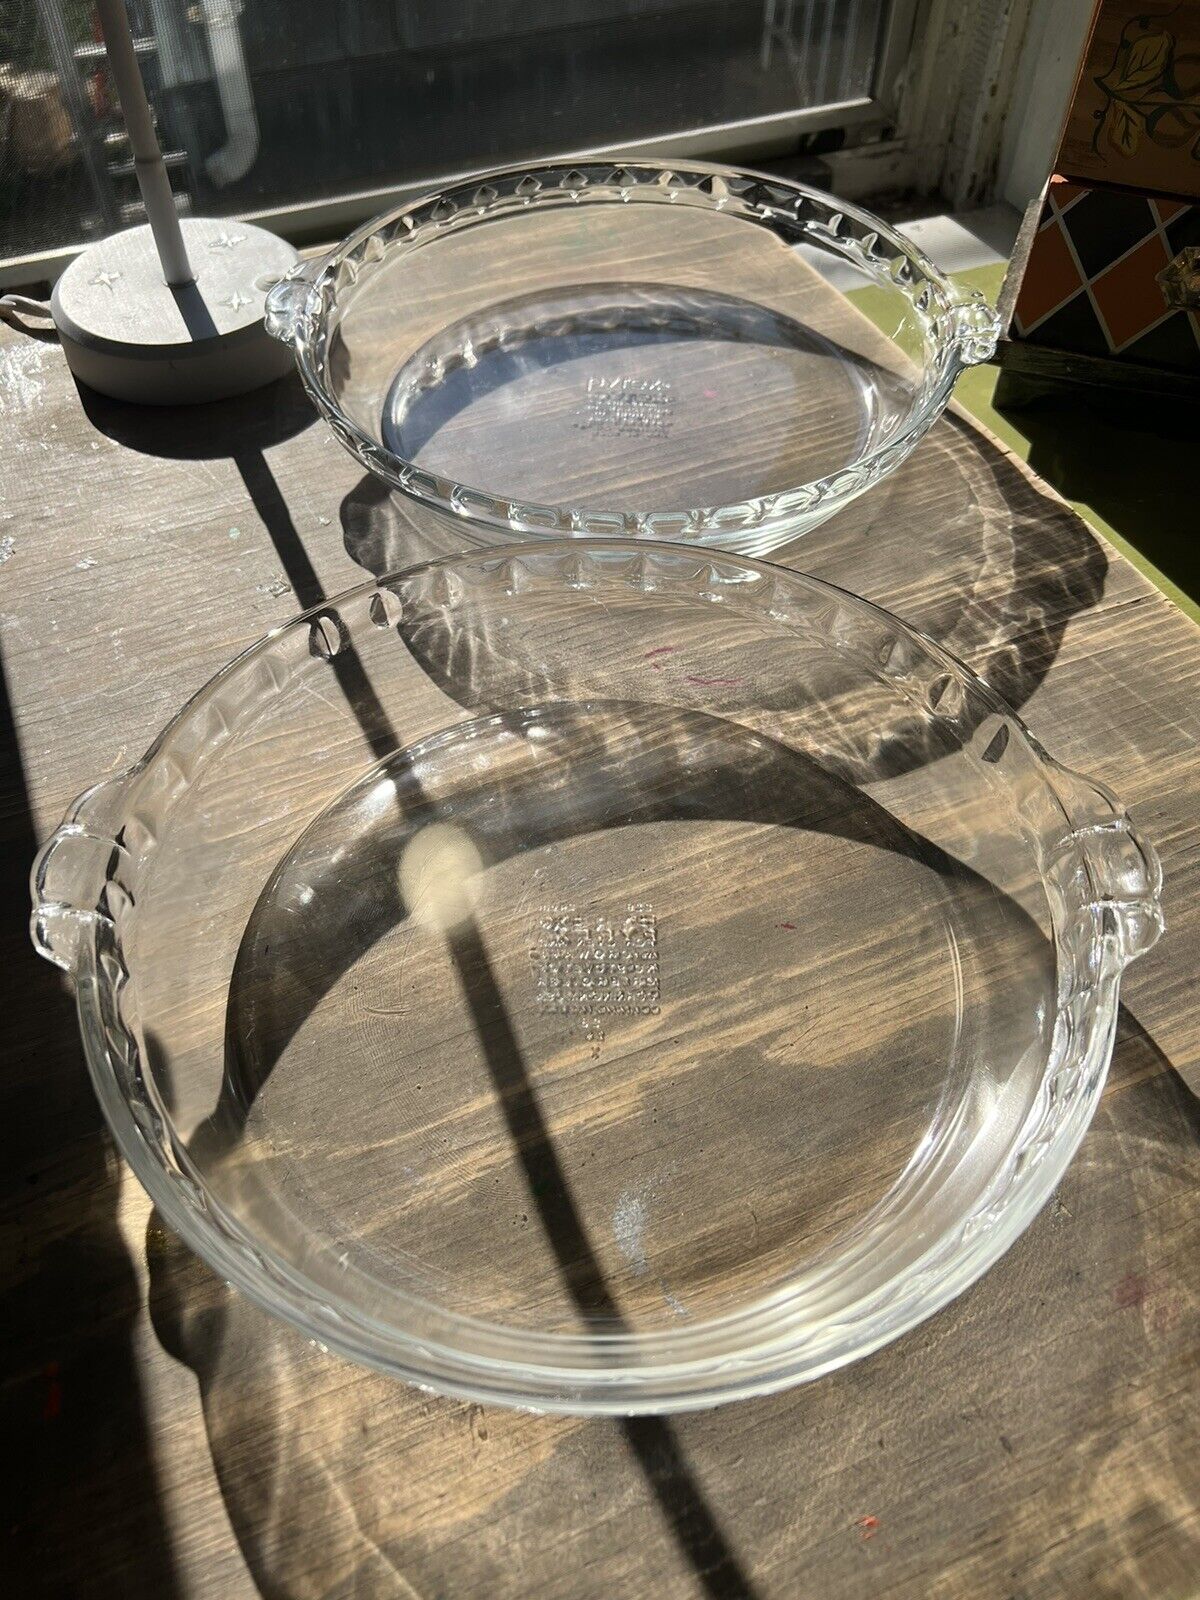 2 Vintage Pyrex 10 Inch #210 Pie Plate Pie Tart Baking Dish Clear Glass Pie Pan